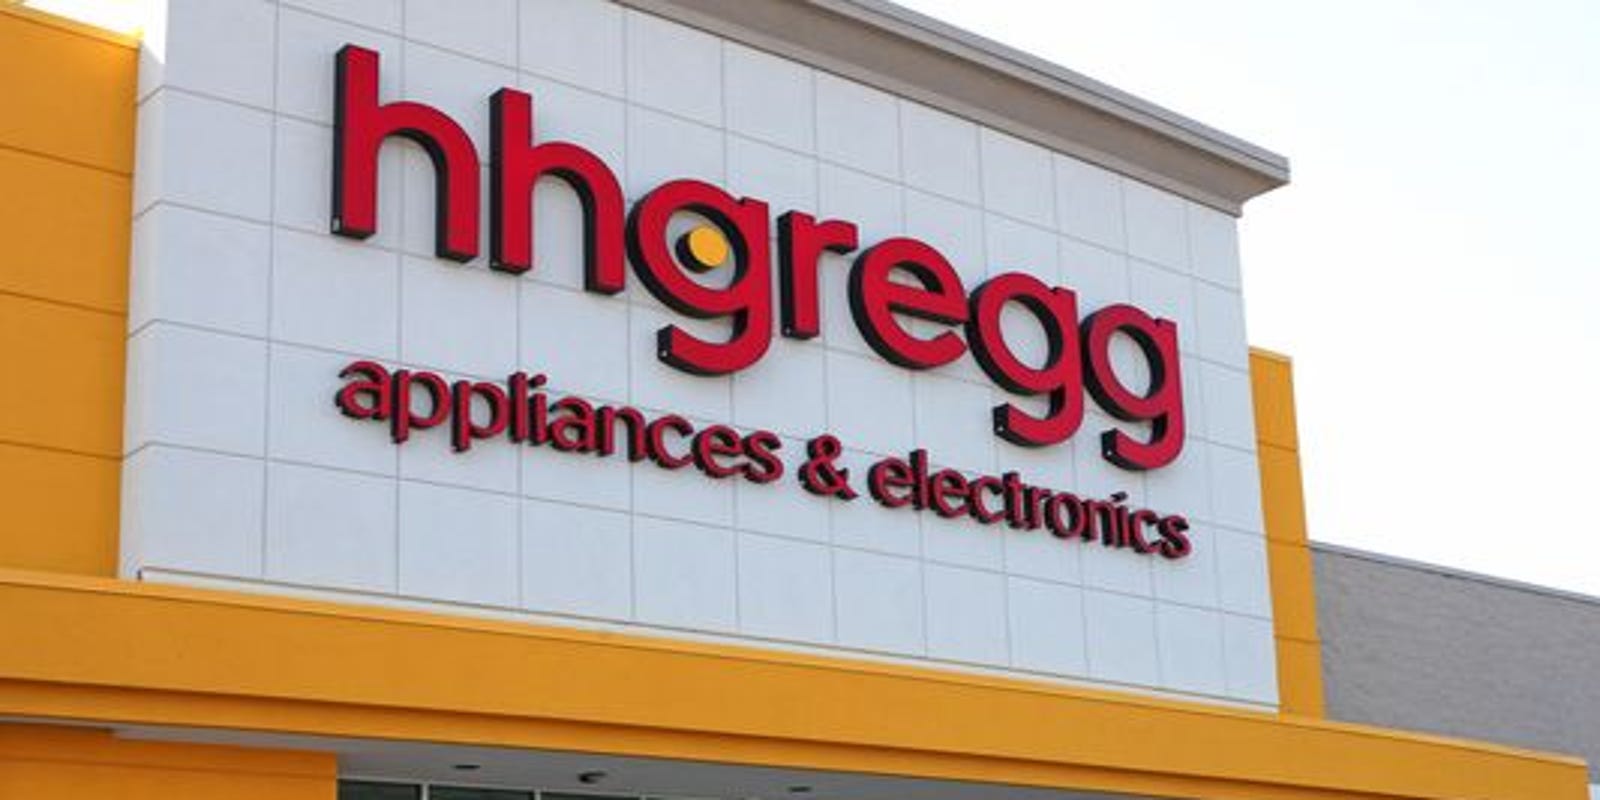 Retailer Hhgregg Faced Difficult Marketplace